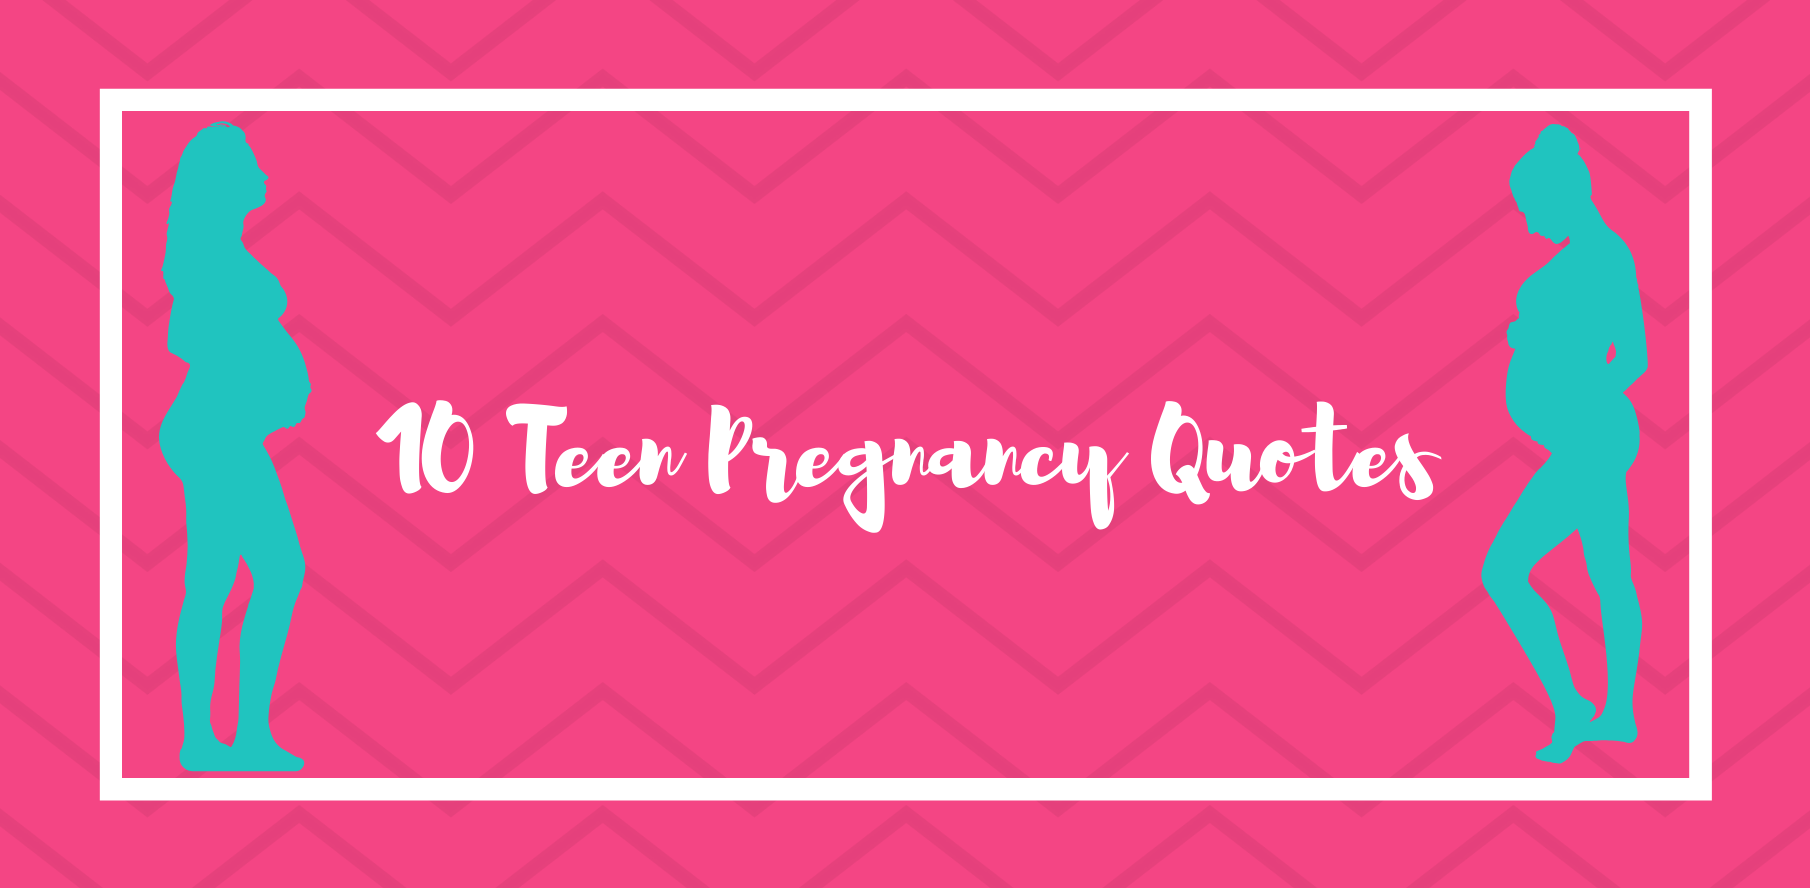 teen pregnancy quotes